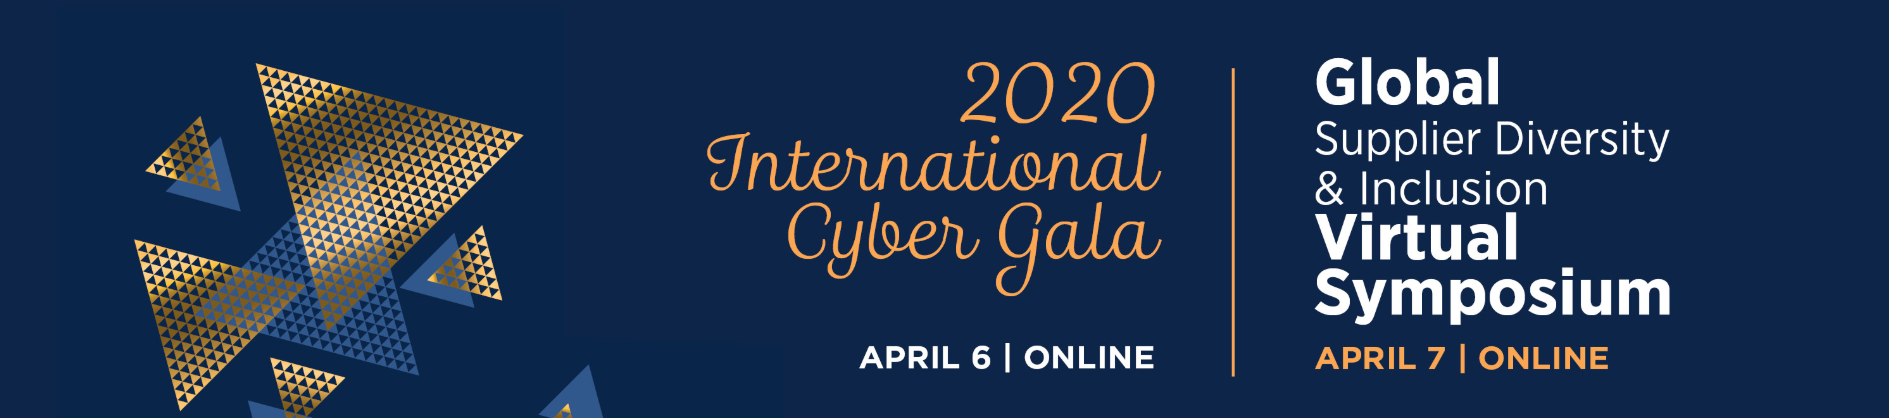 WEConnect International 2020 Virtual Symposium and Cyber Gala